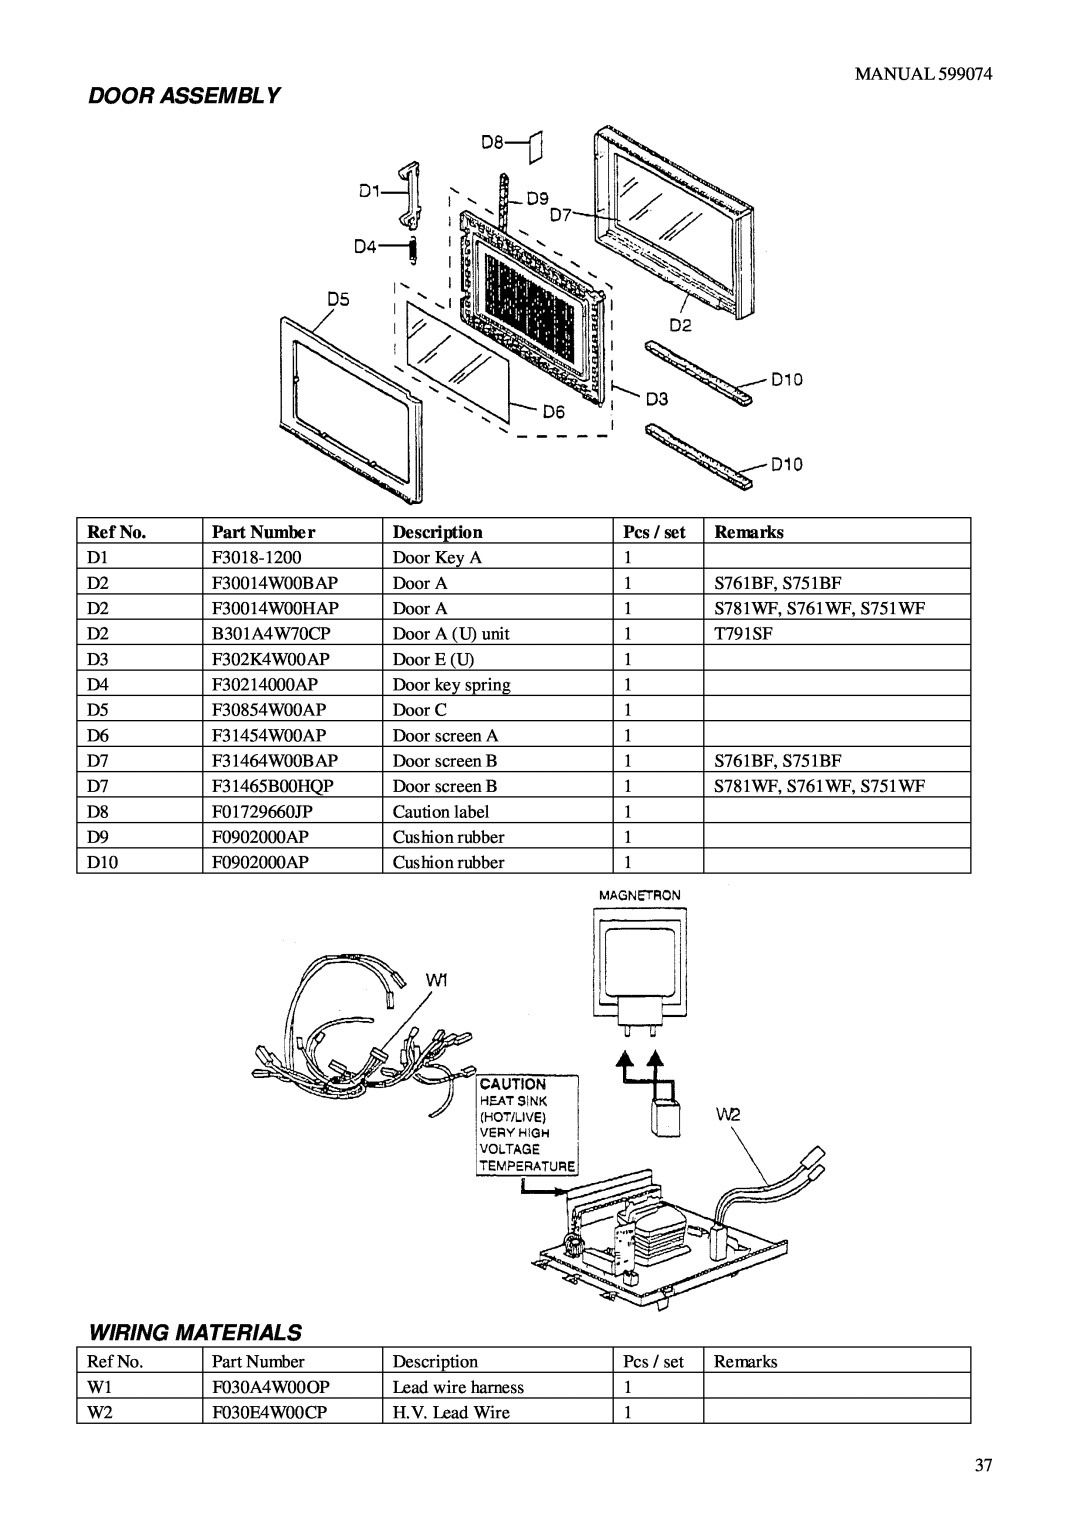 Fisher & Paykel BI601QASE1.5 manual Door Assembly, Wiring Materials, Ref No, Part Number, Description, Pcs / set, Remarks 